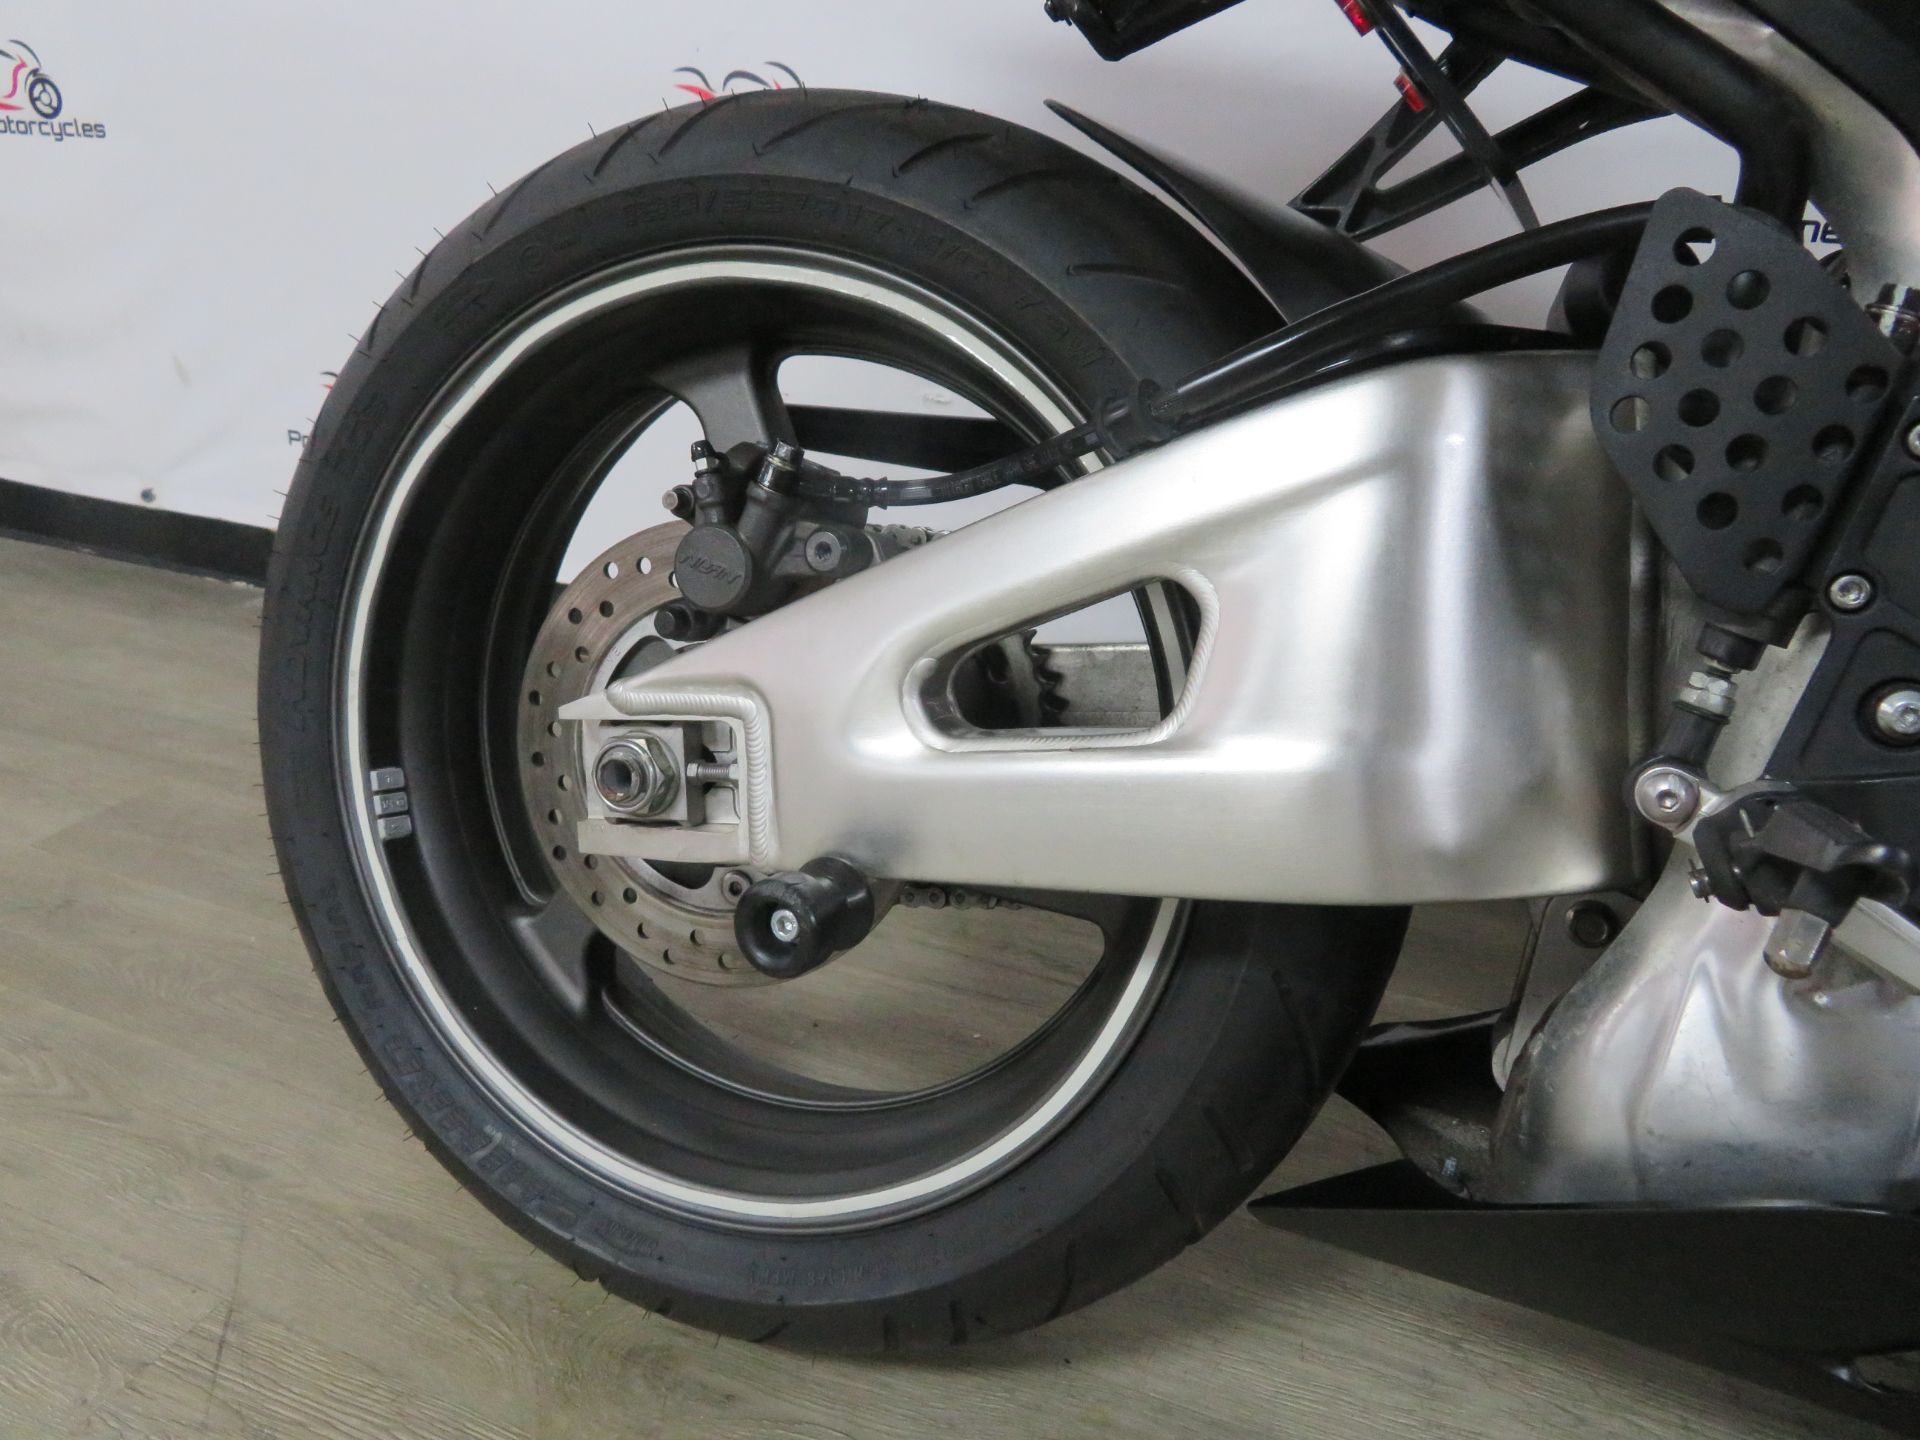 2012 Honda CBR®600RR in Sanford, Florida - Photo 20